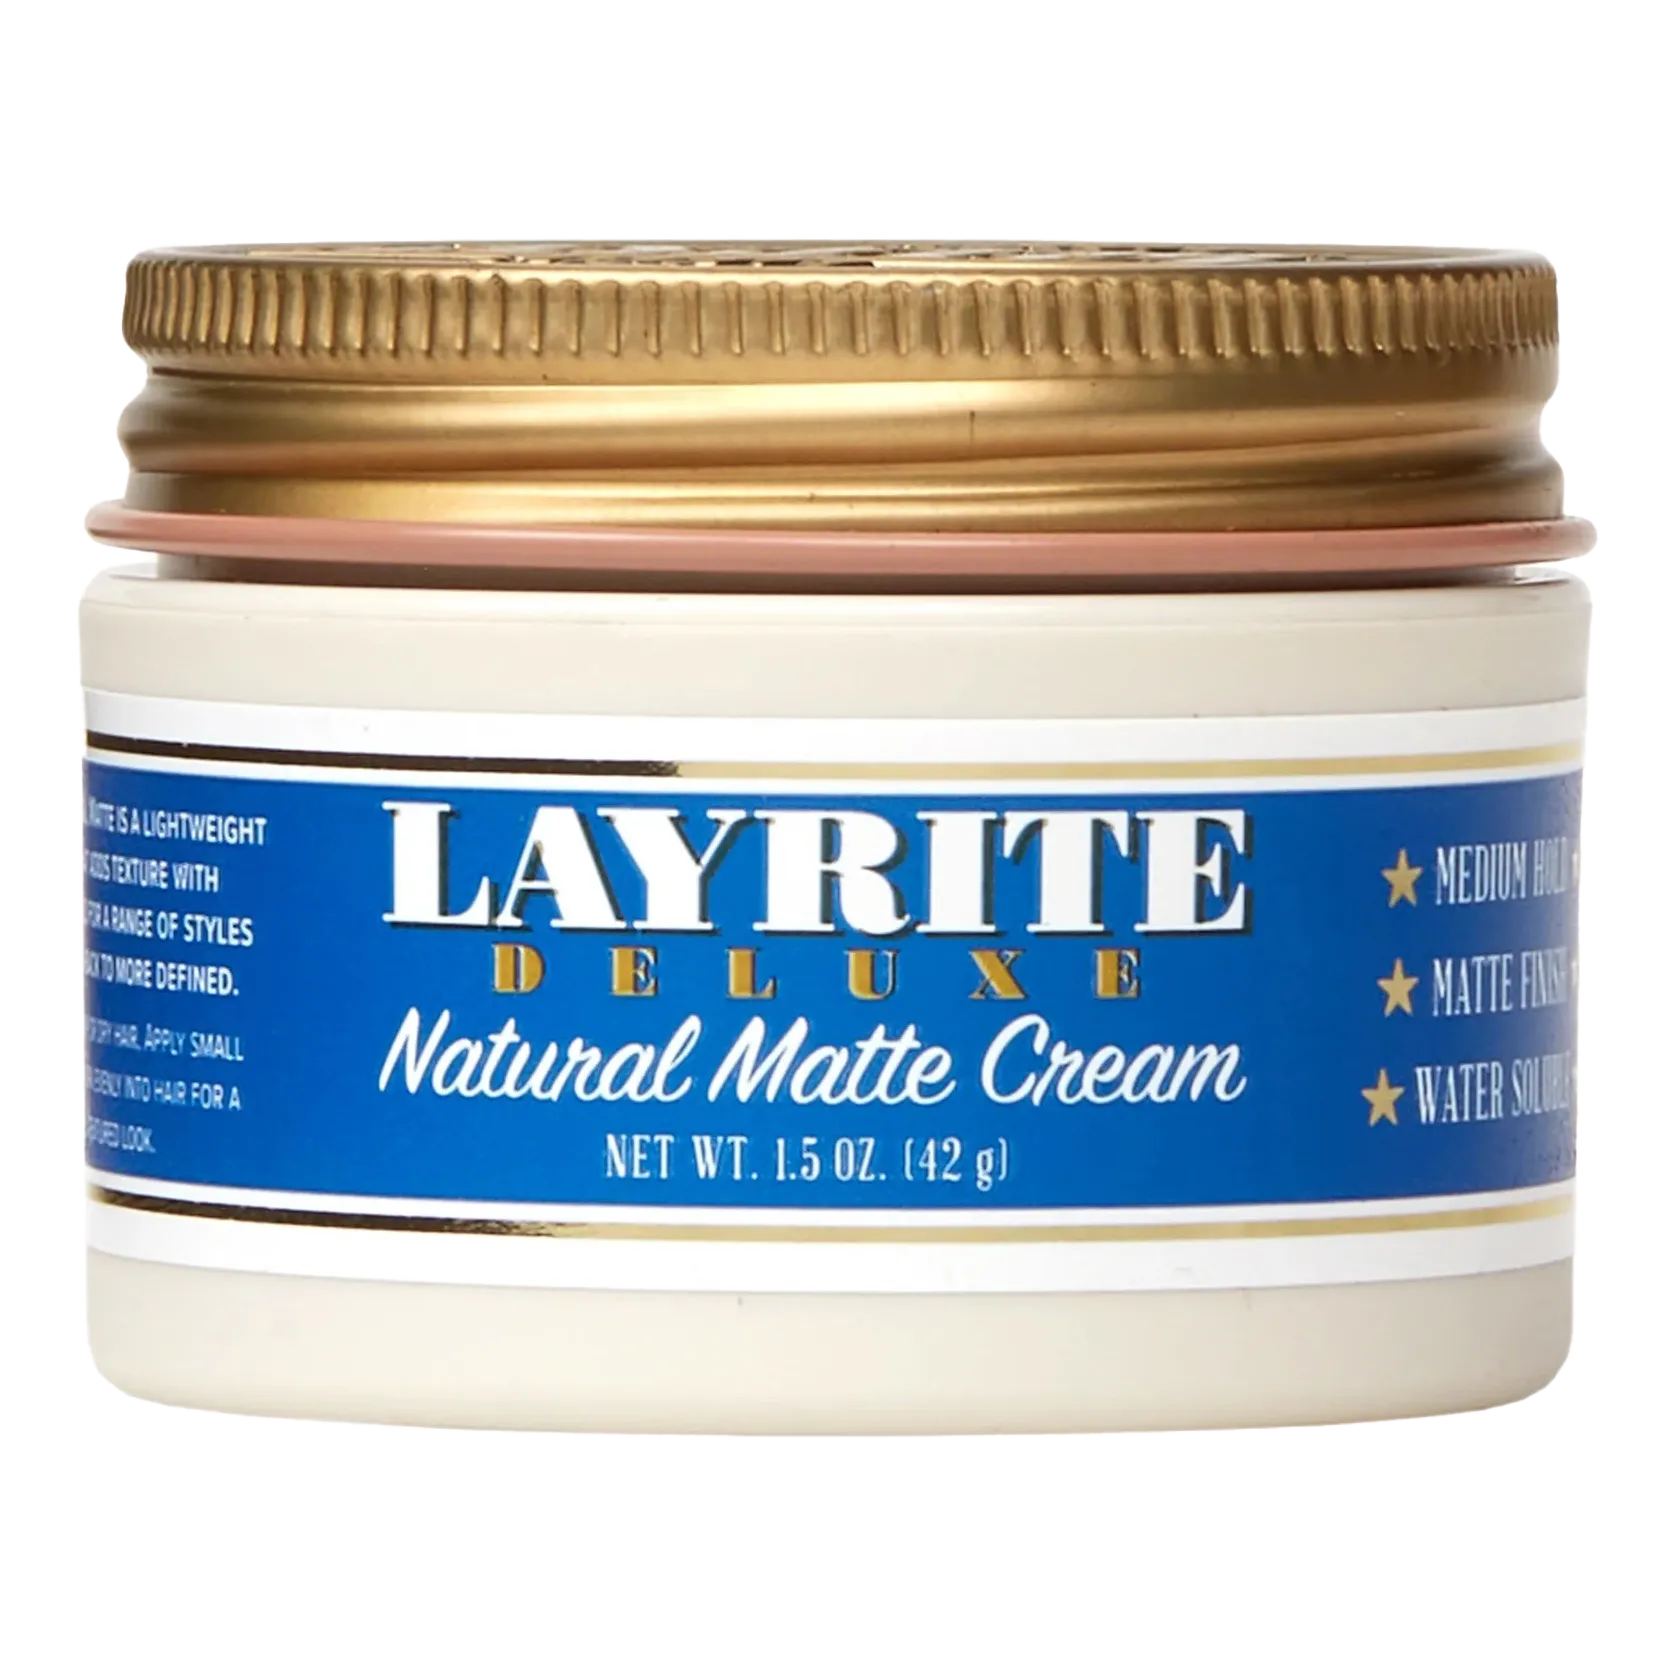 Layrite Natural Matte Cream 42 g 